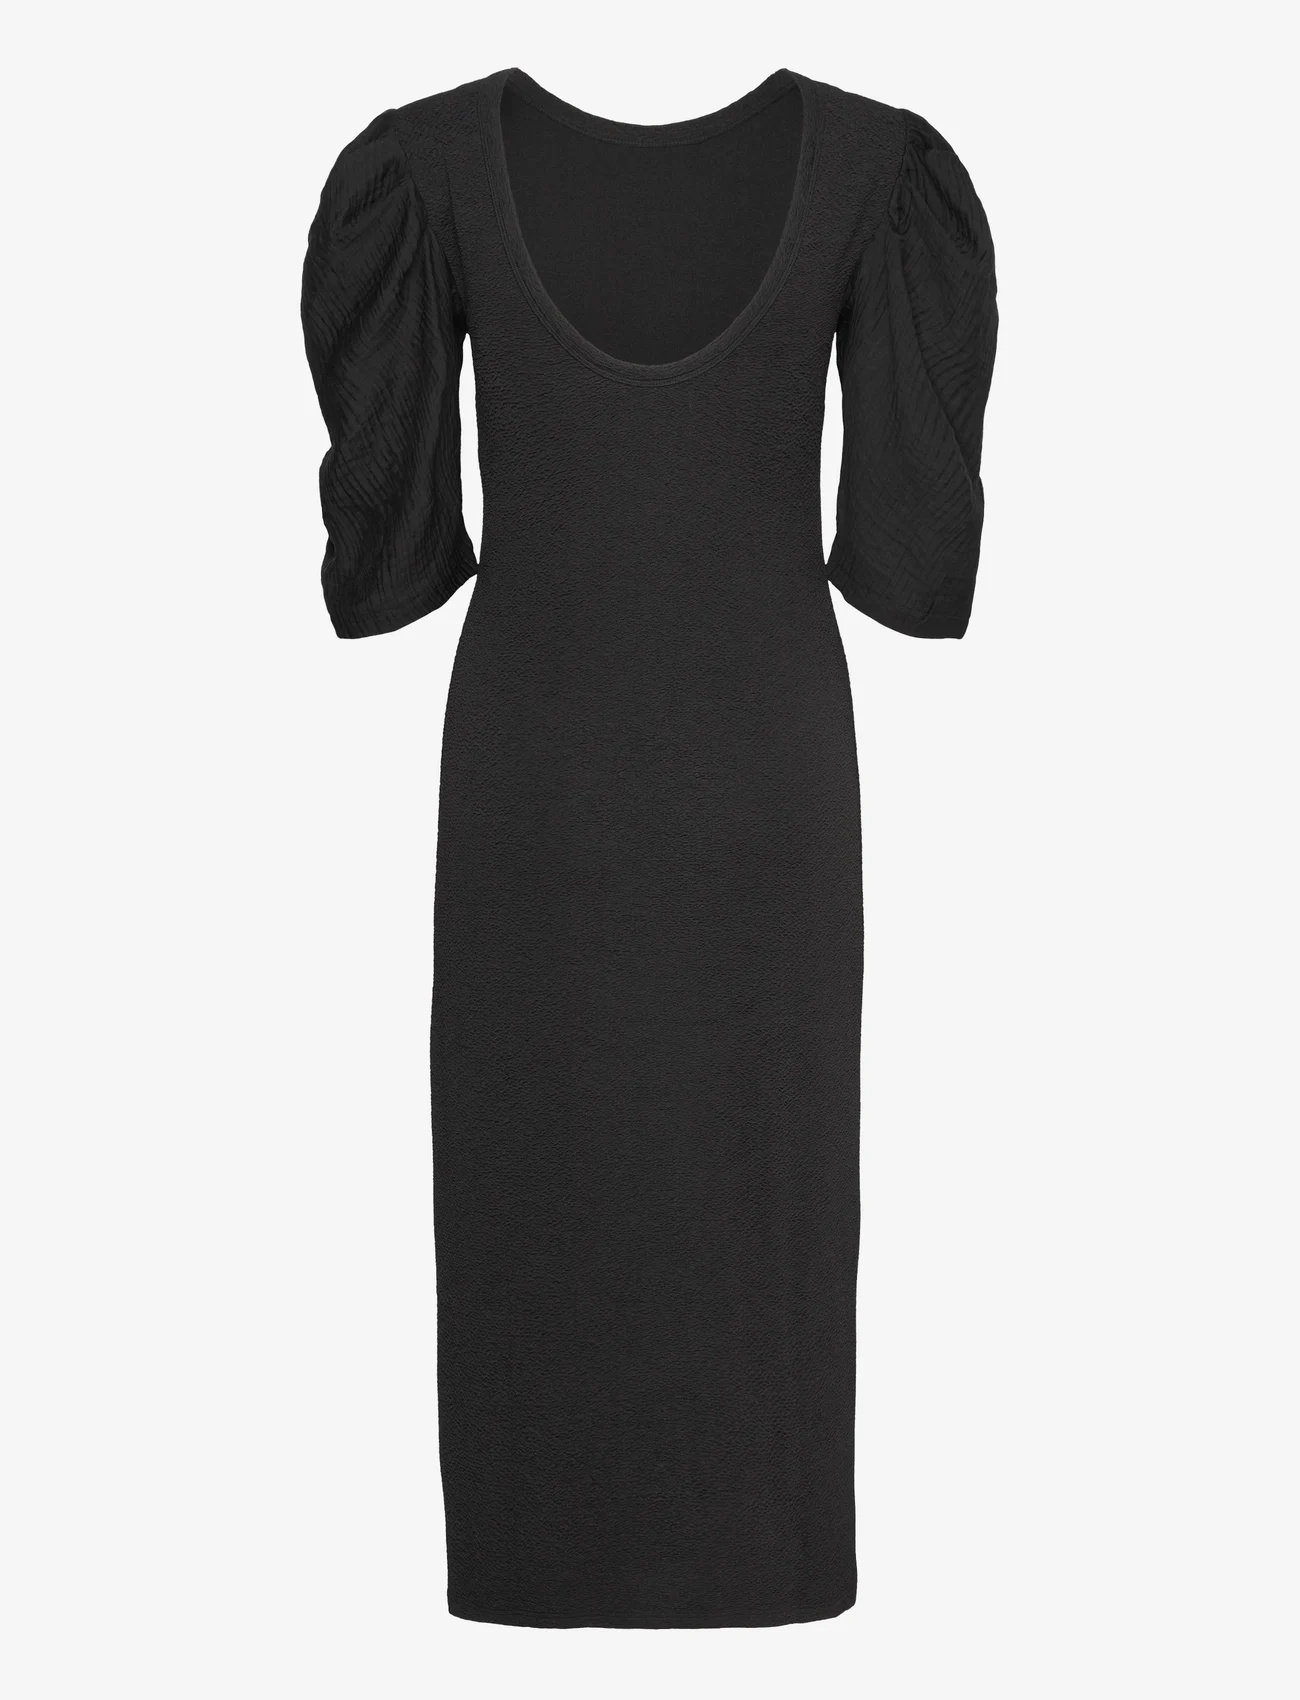 MAUD - Annie Dress - sukienki do kolan i midi - black - 1